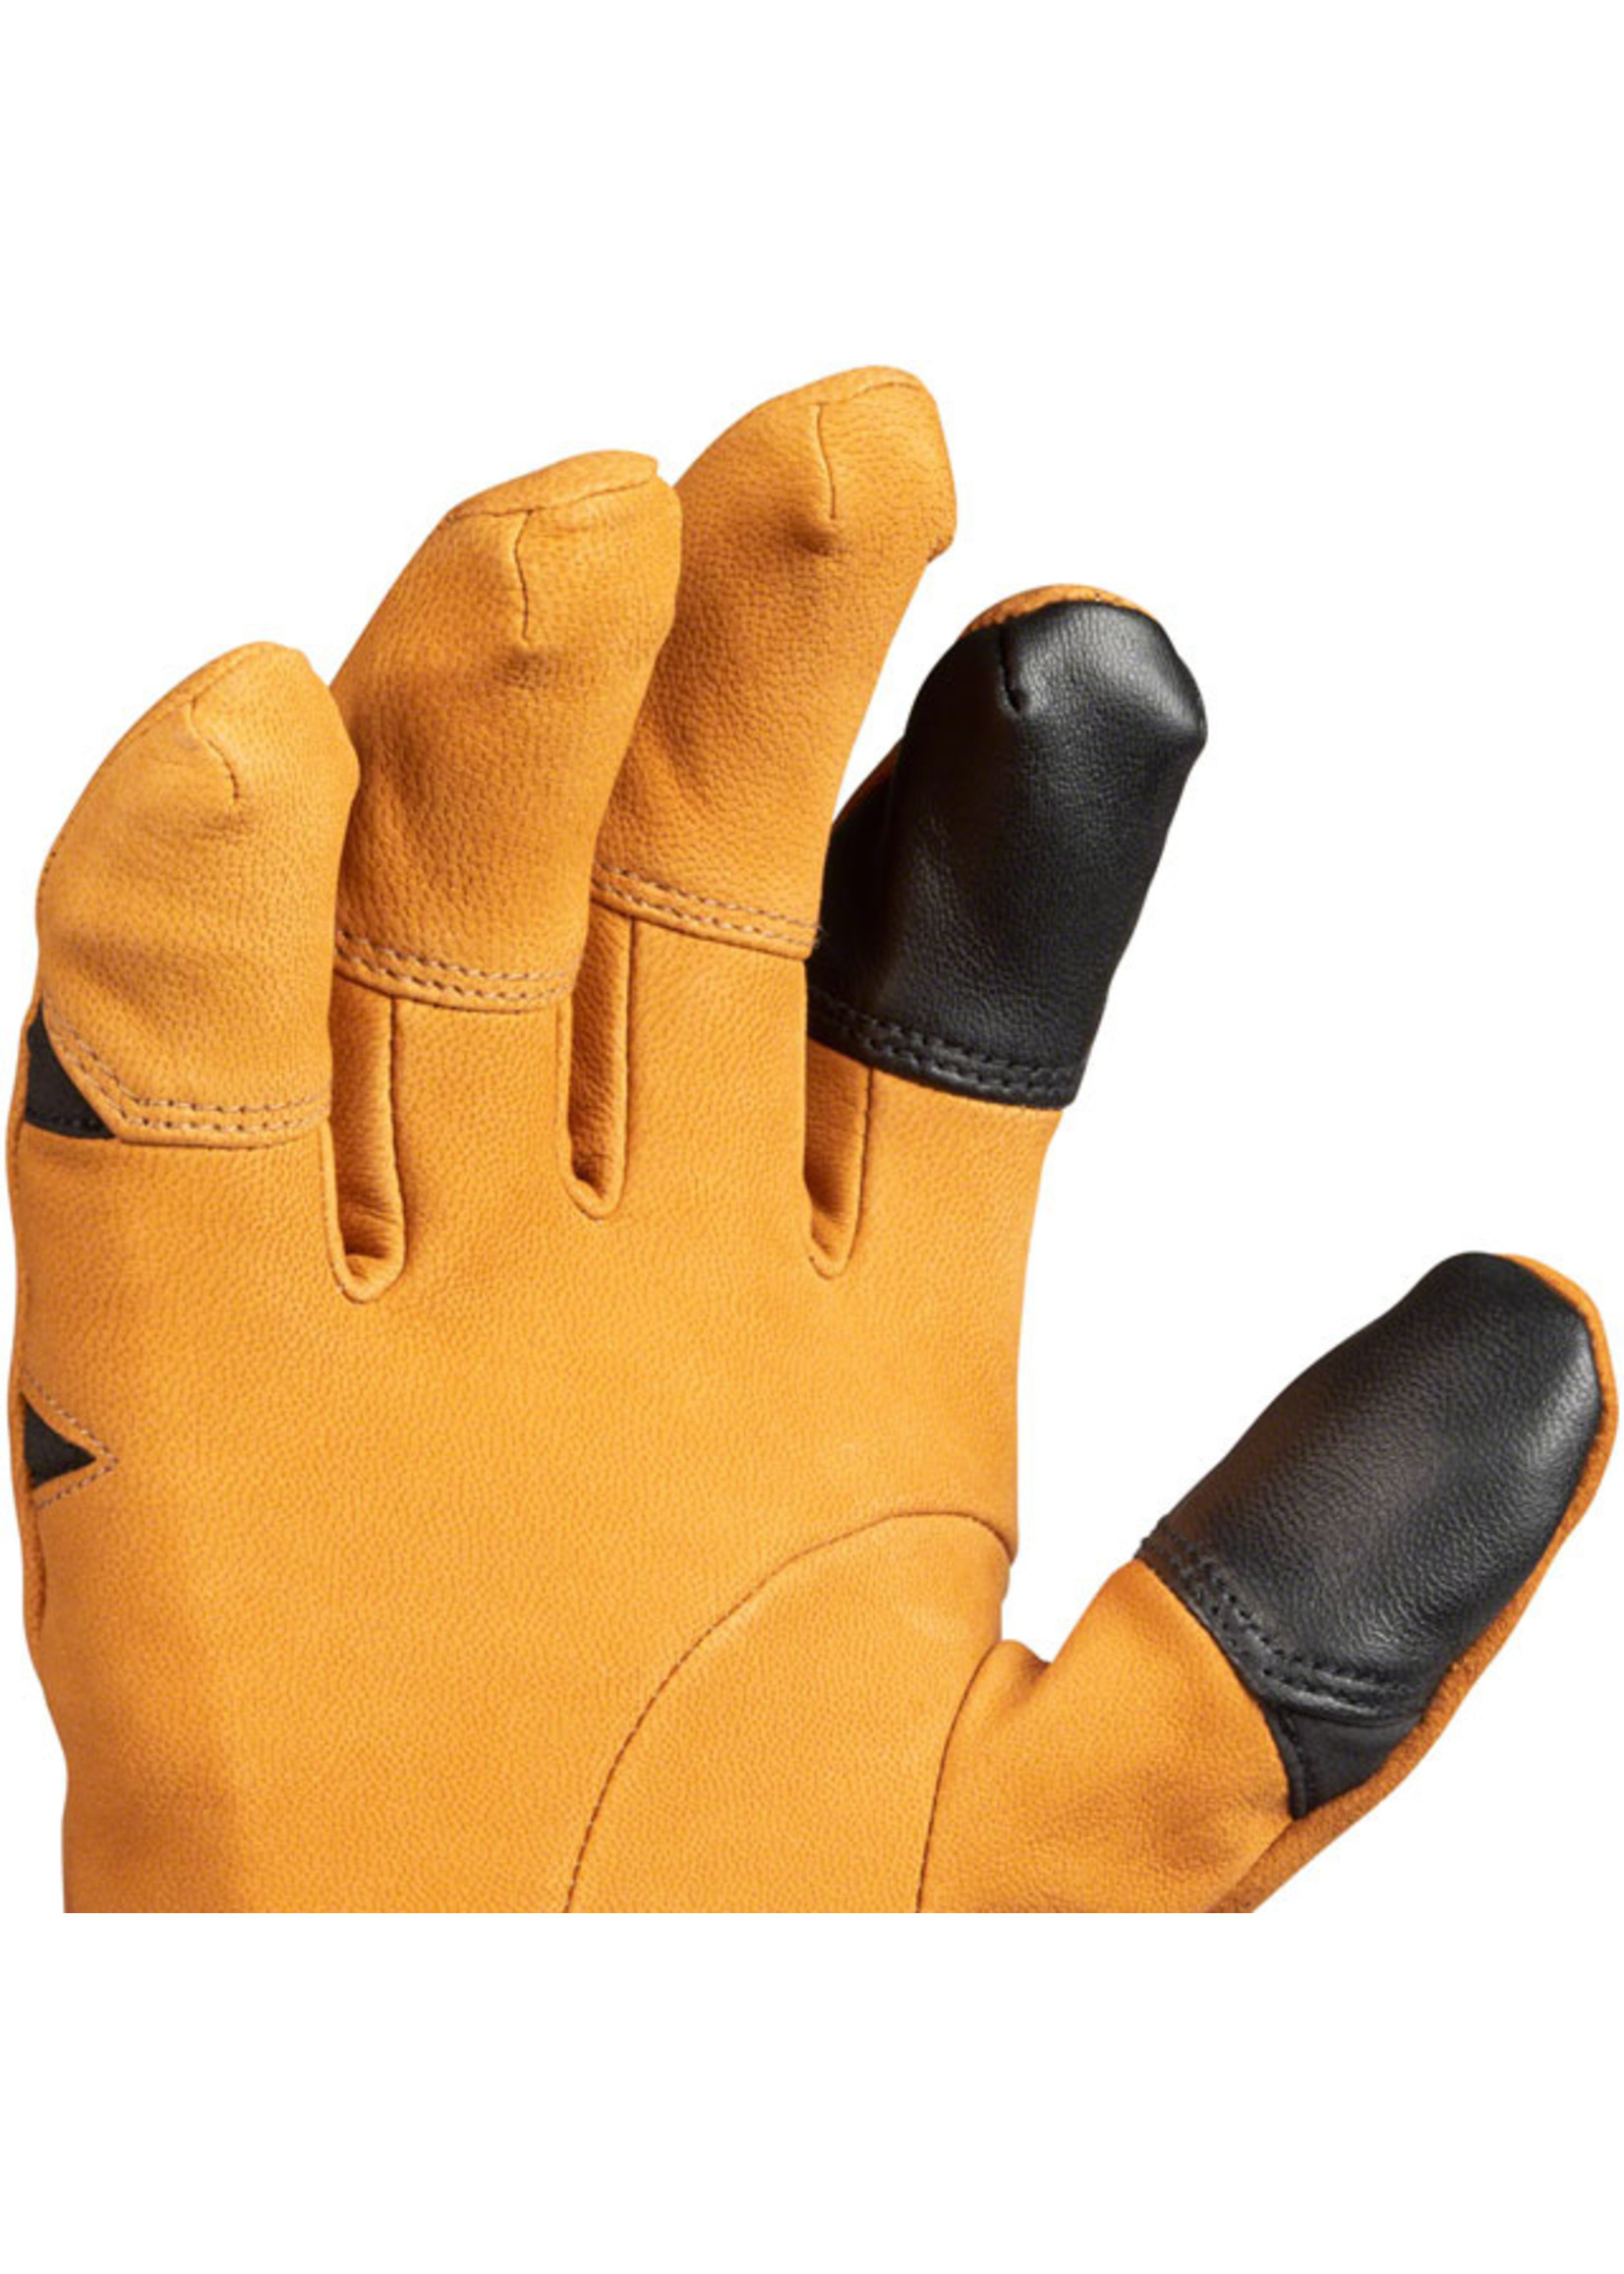 45NRTH 45NRTH Sturmfist 5 LTR Leather Glove - Tan/Black Full Finger Large